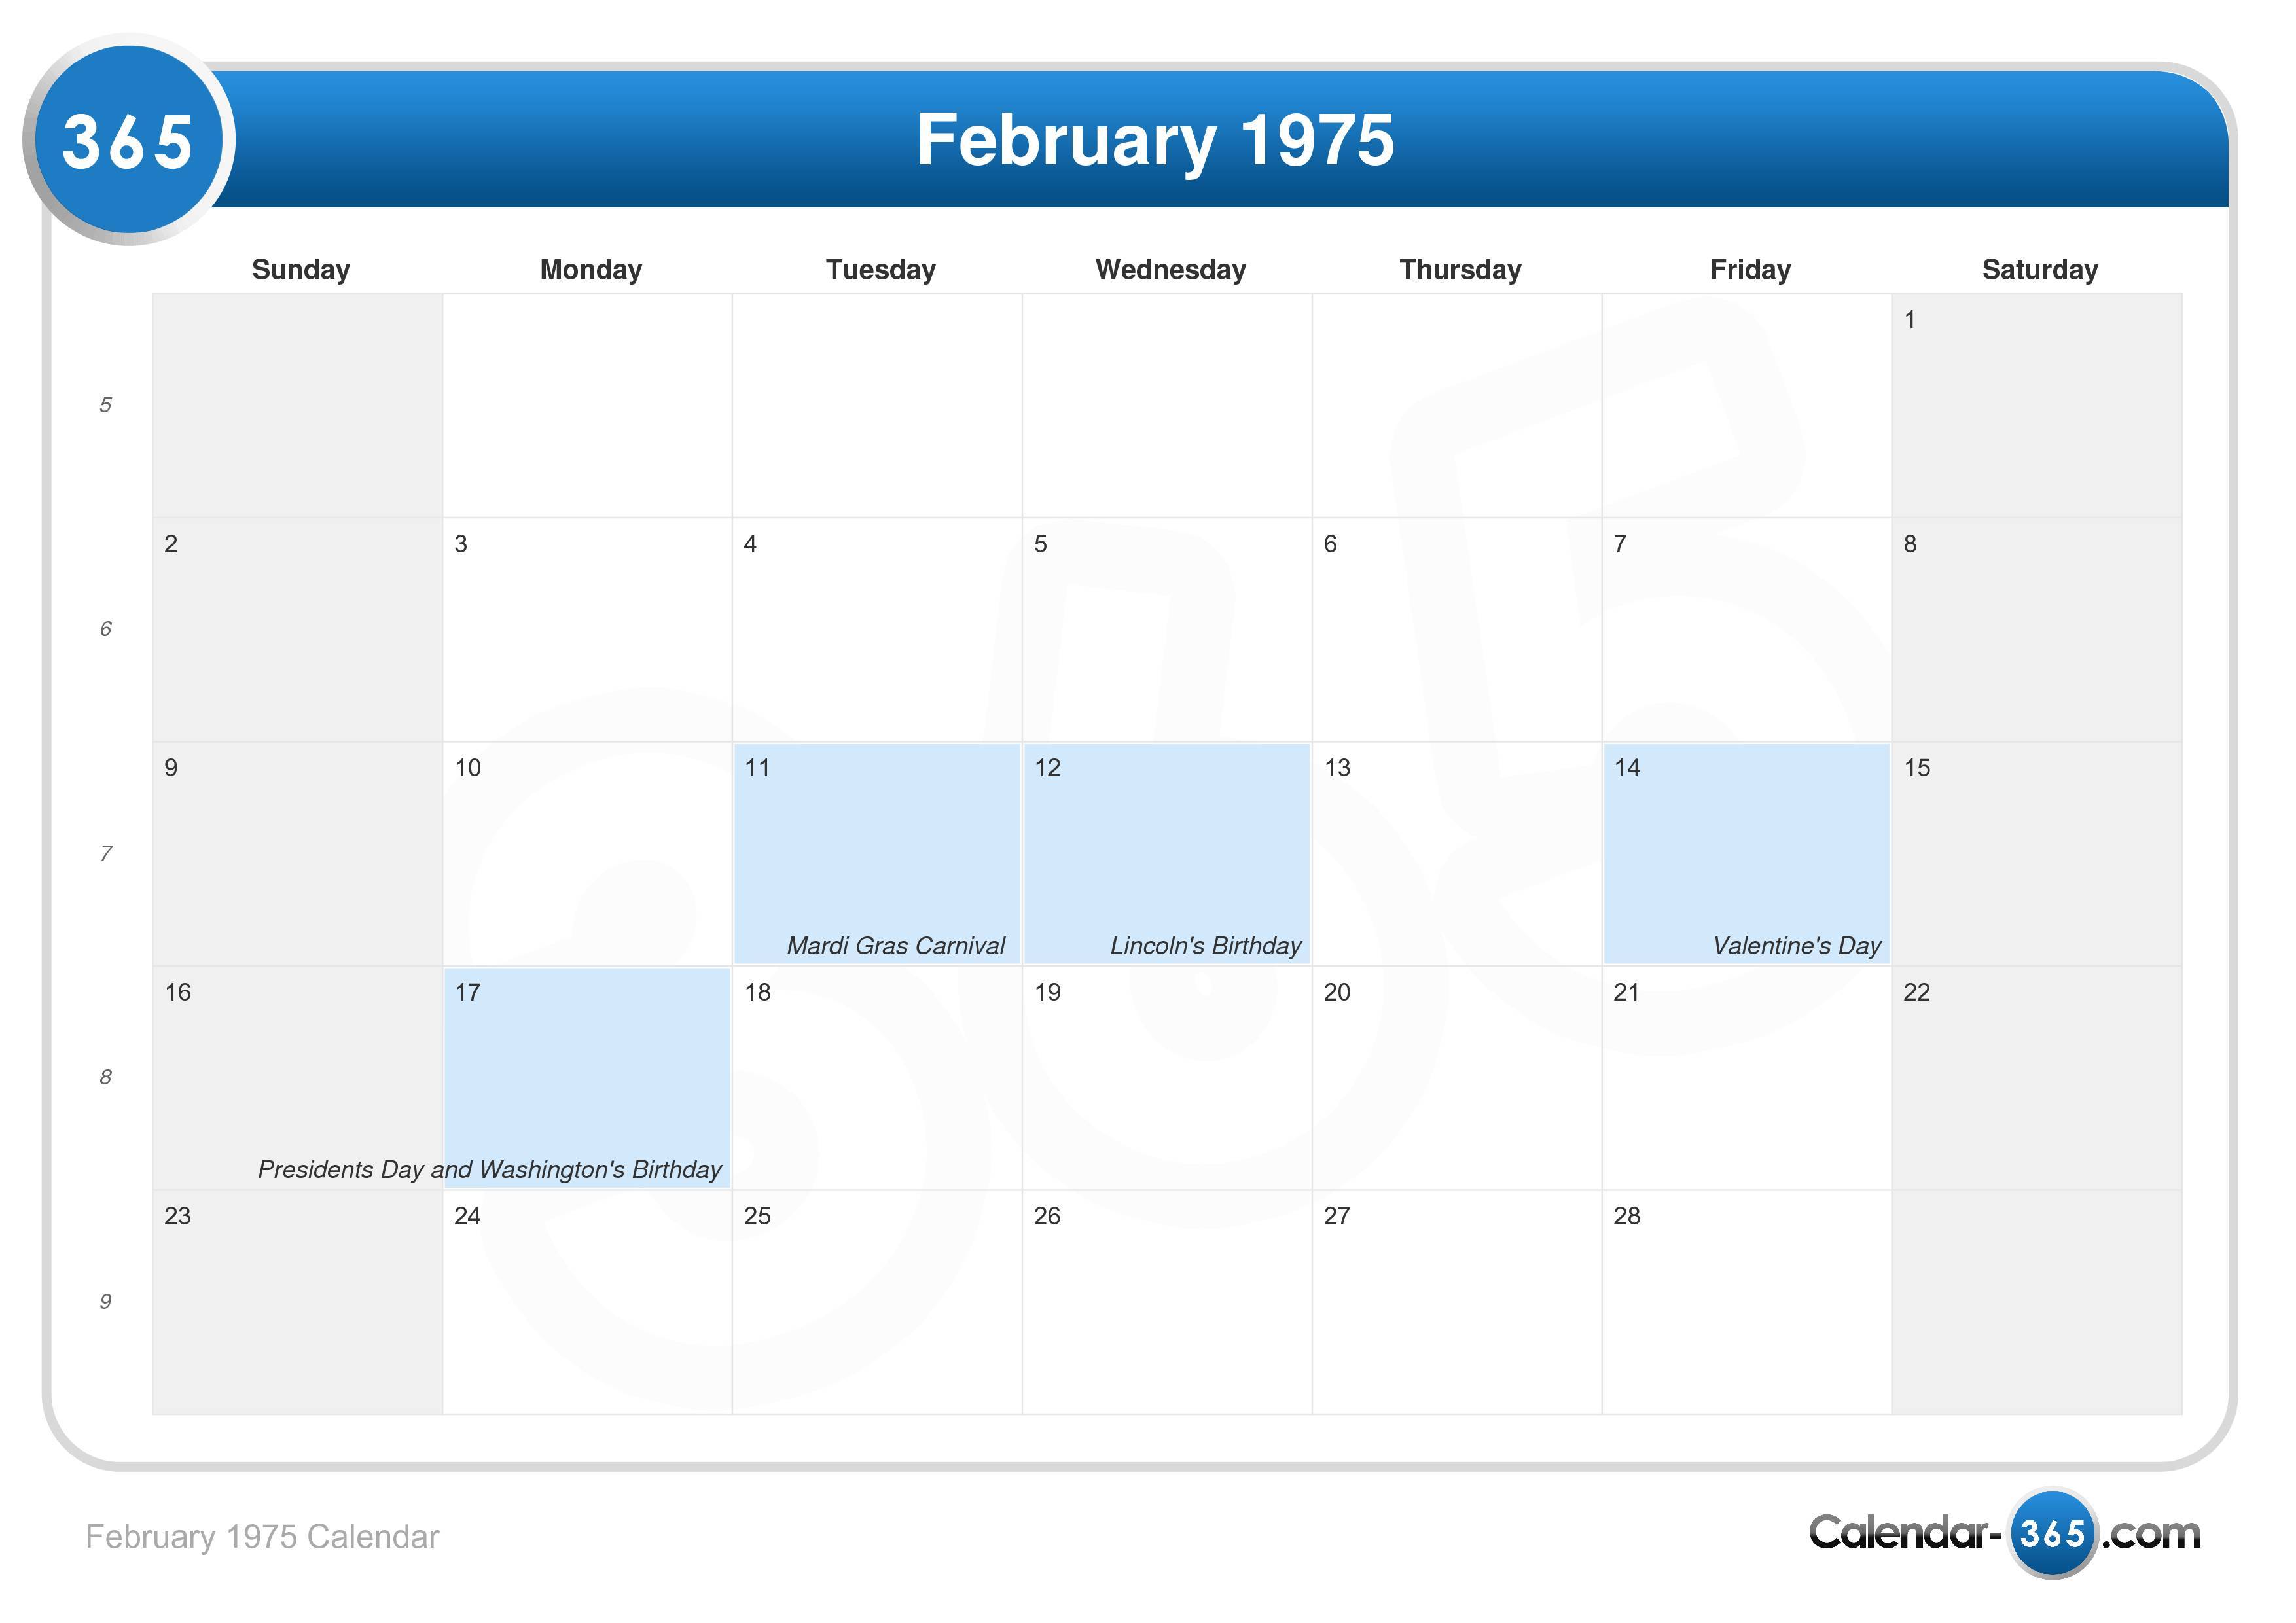 February 1975 Calendar